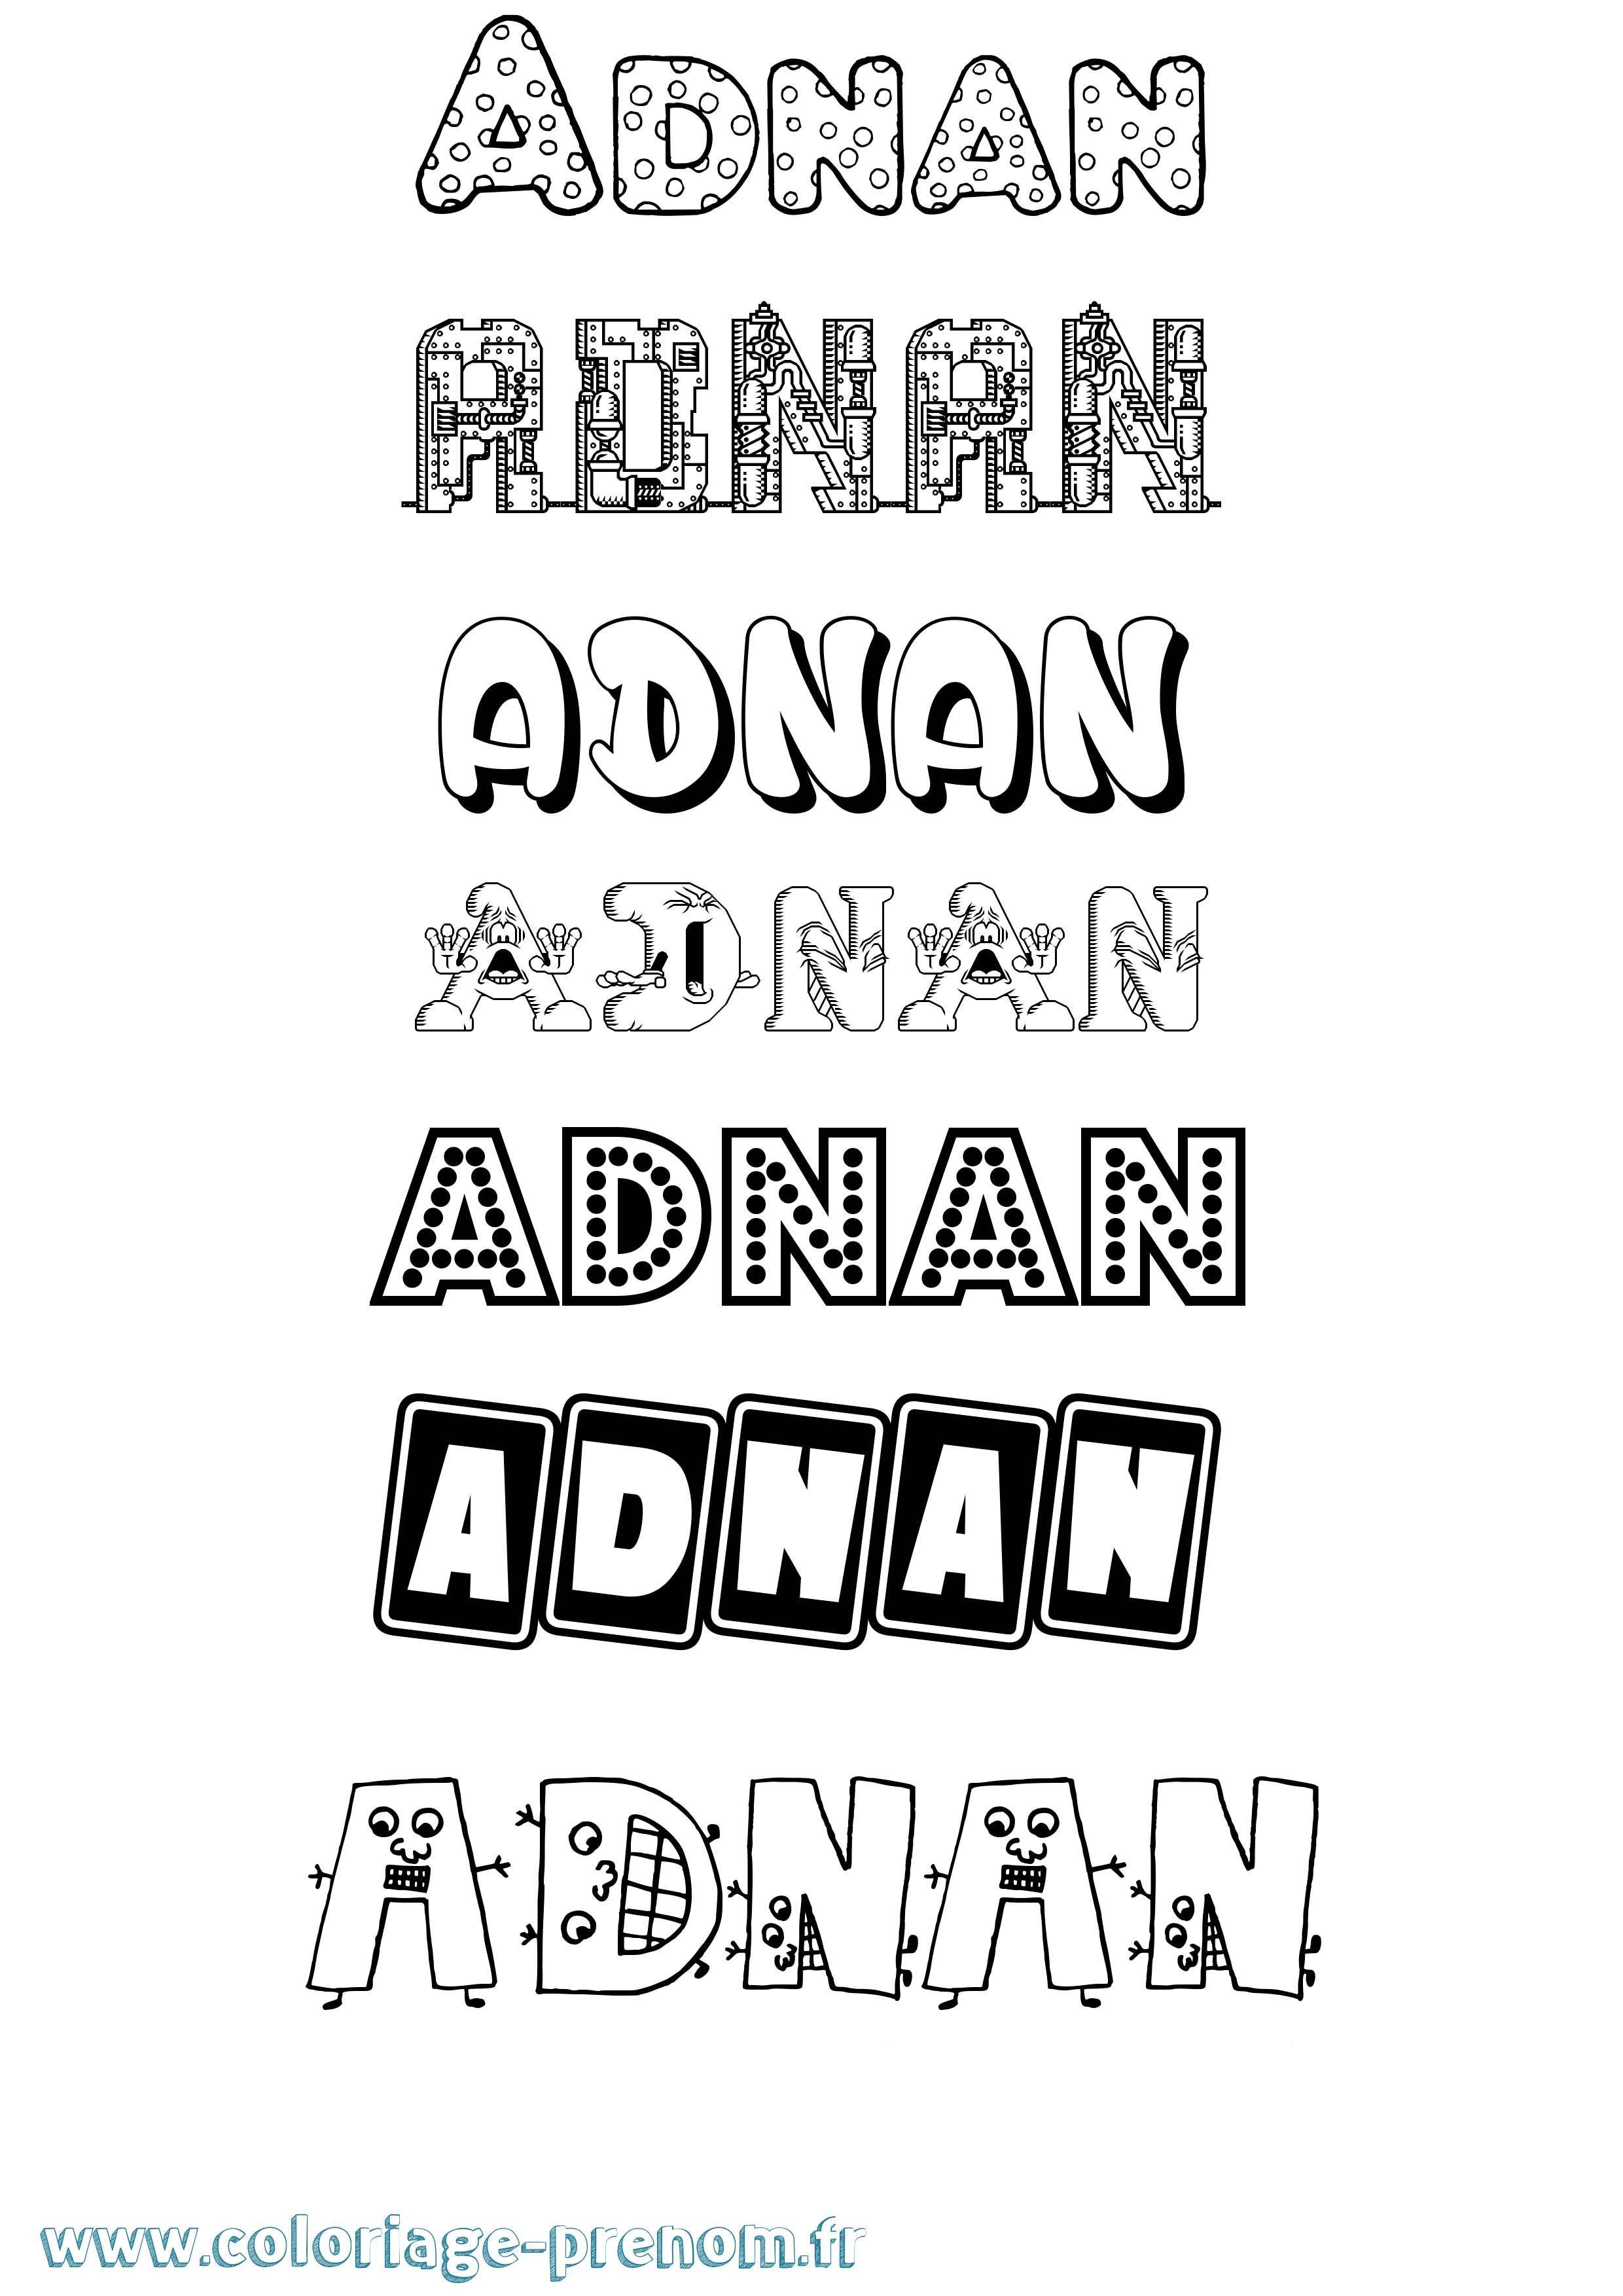 Coloriage prénom Adnan Fun